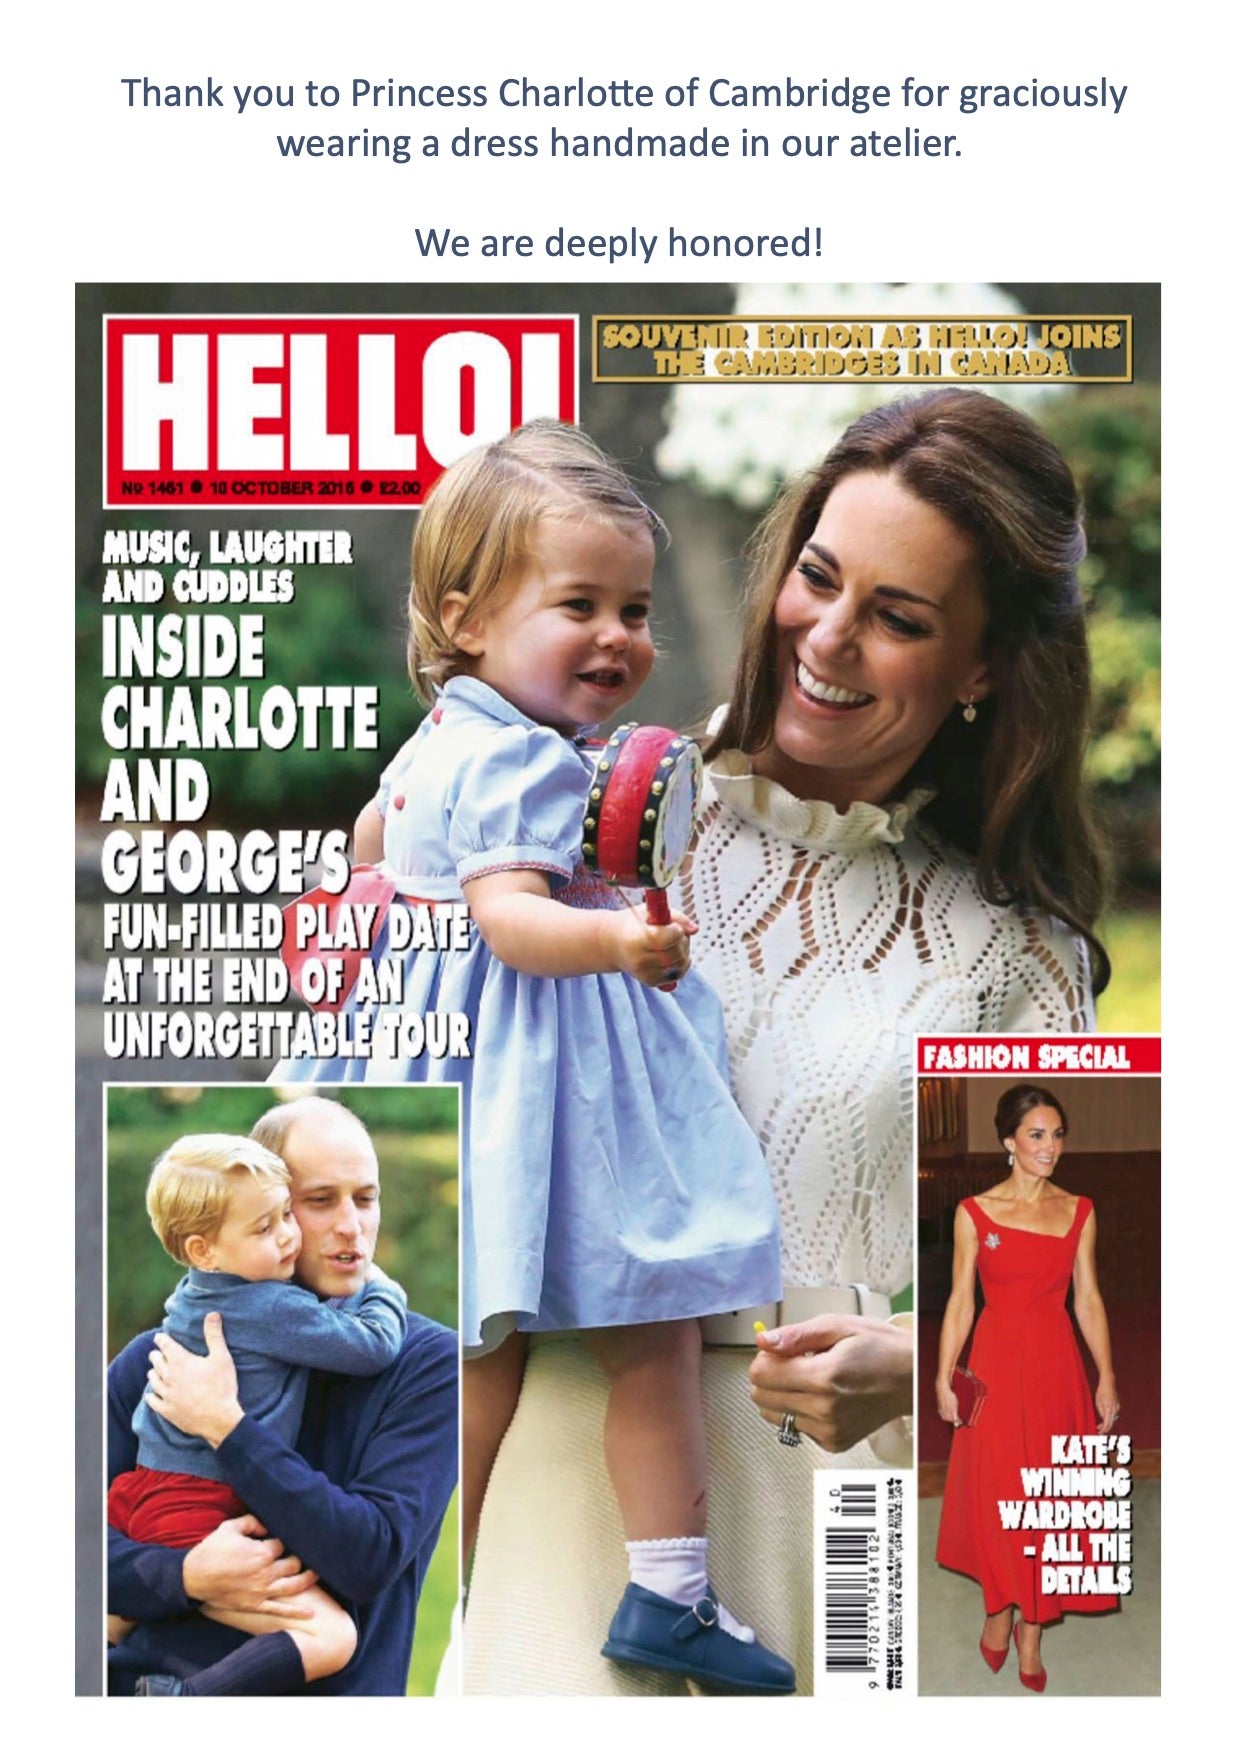 Princess Charlotte of Cambridge smocked dress - how to style your child like Princess Charlotte?